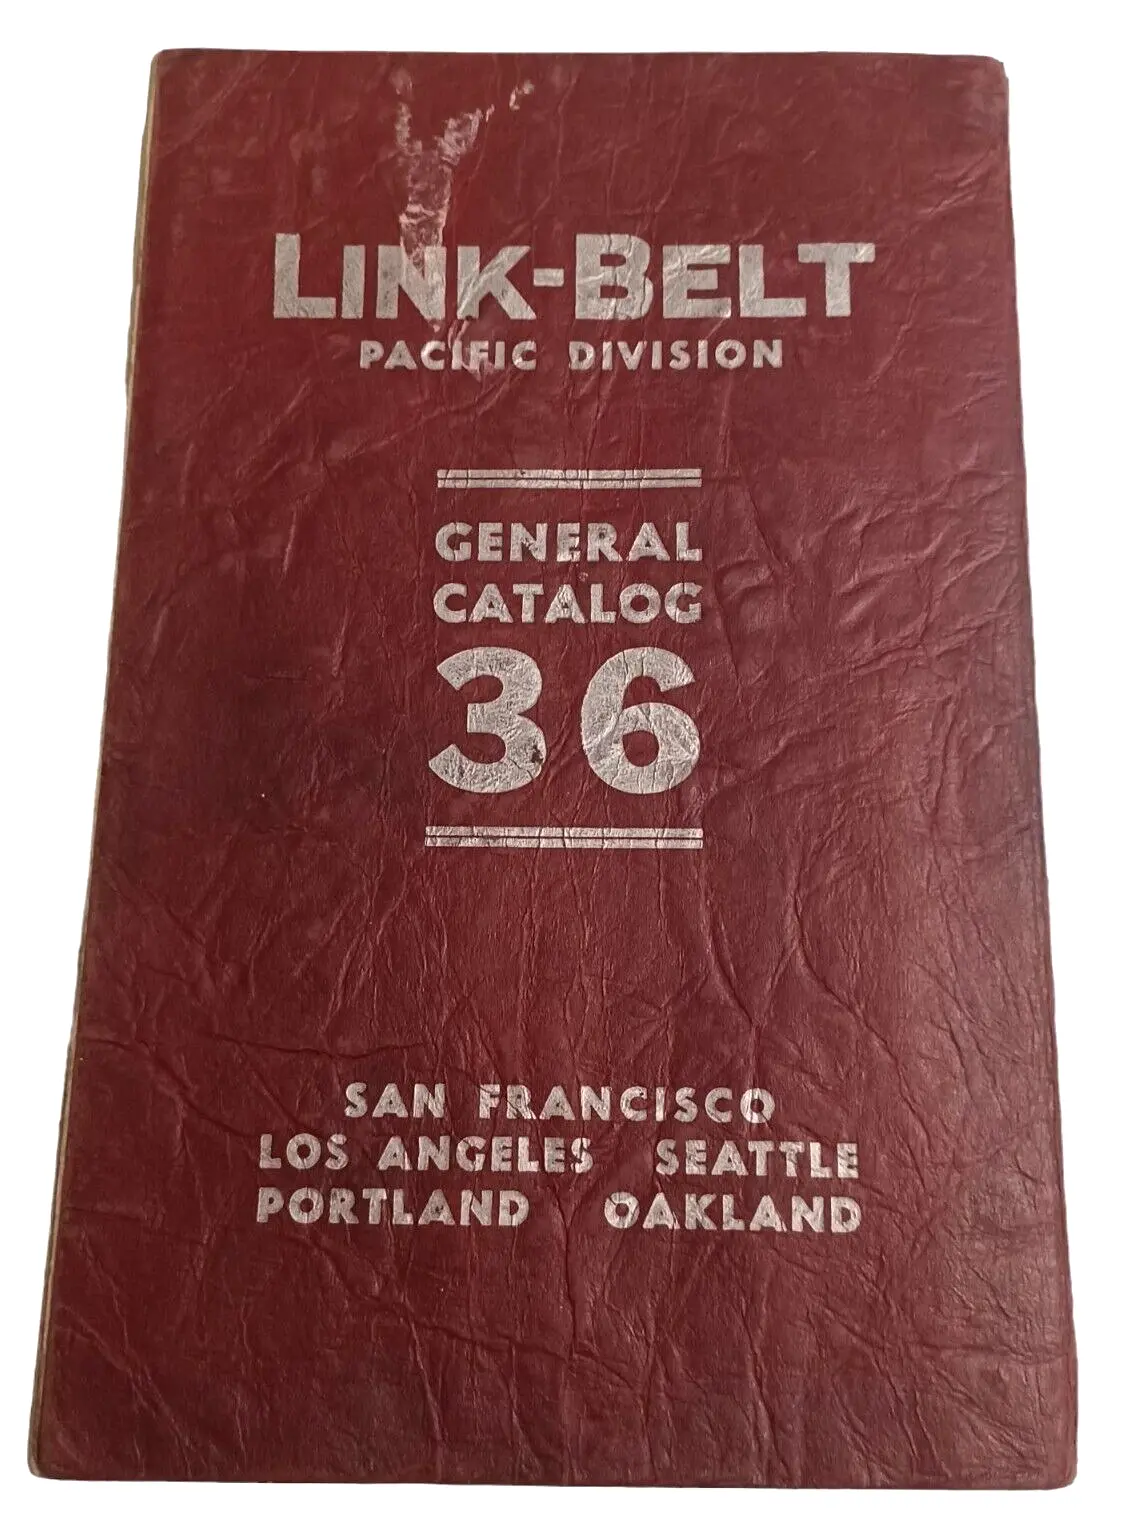 1936 Link-belt Pacific Divisio General Catalog No 36